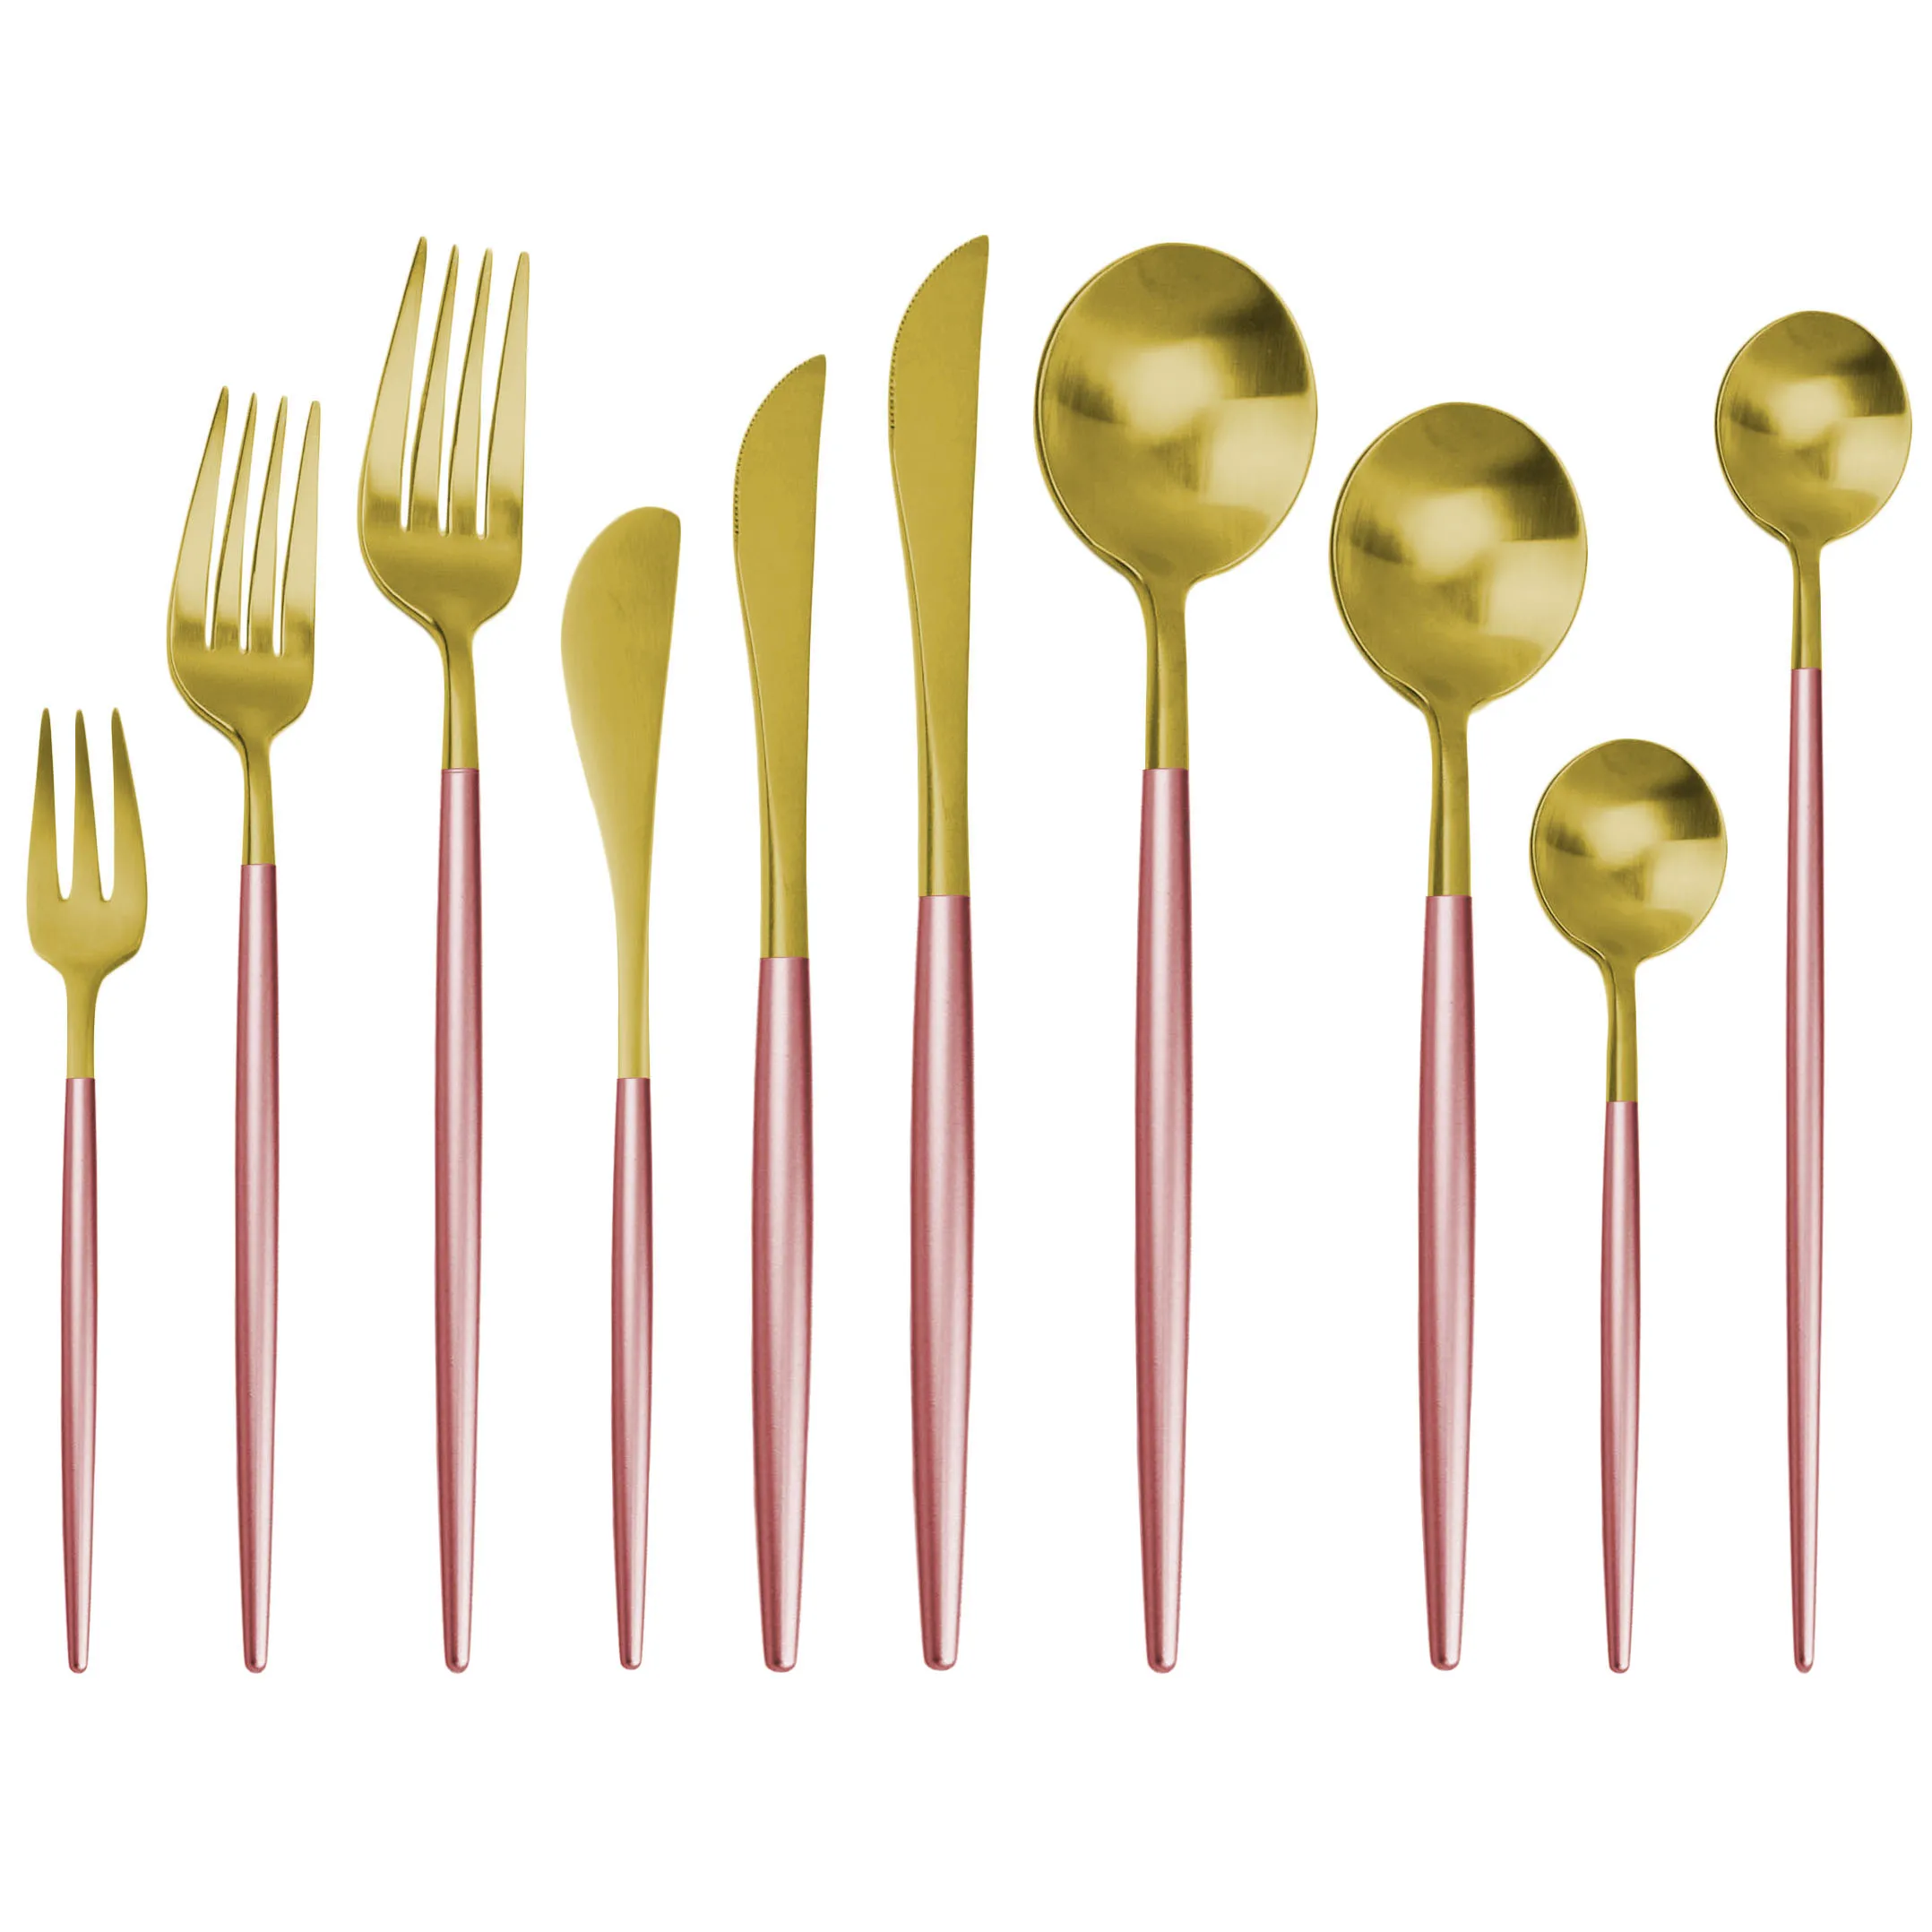 Pink Gold 18/10 Cutlery Set Stainless Steel Dinnerware Steak Knife Fork Spoon Dessert Spoon Party Kitchen Food Tableware Set|Juegos de vajilla|   - AliExpress